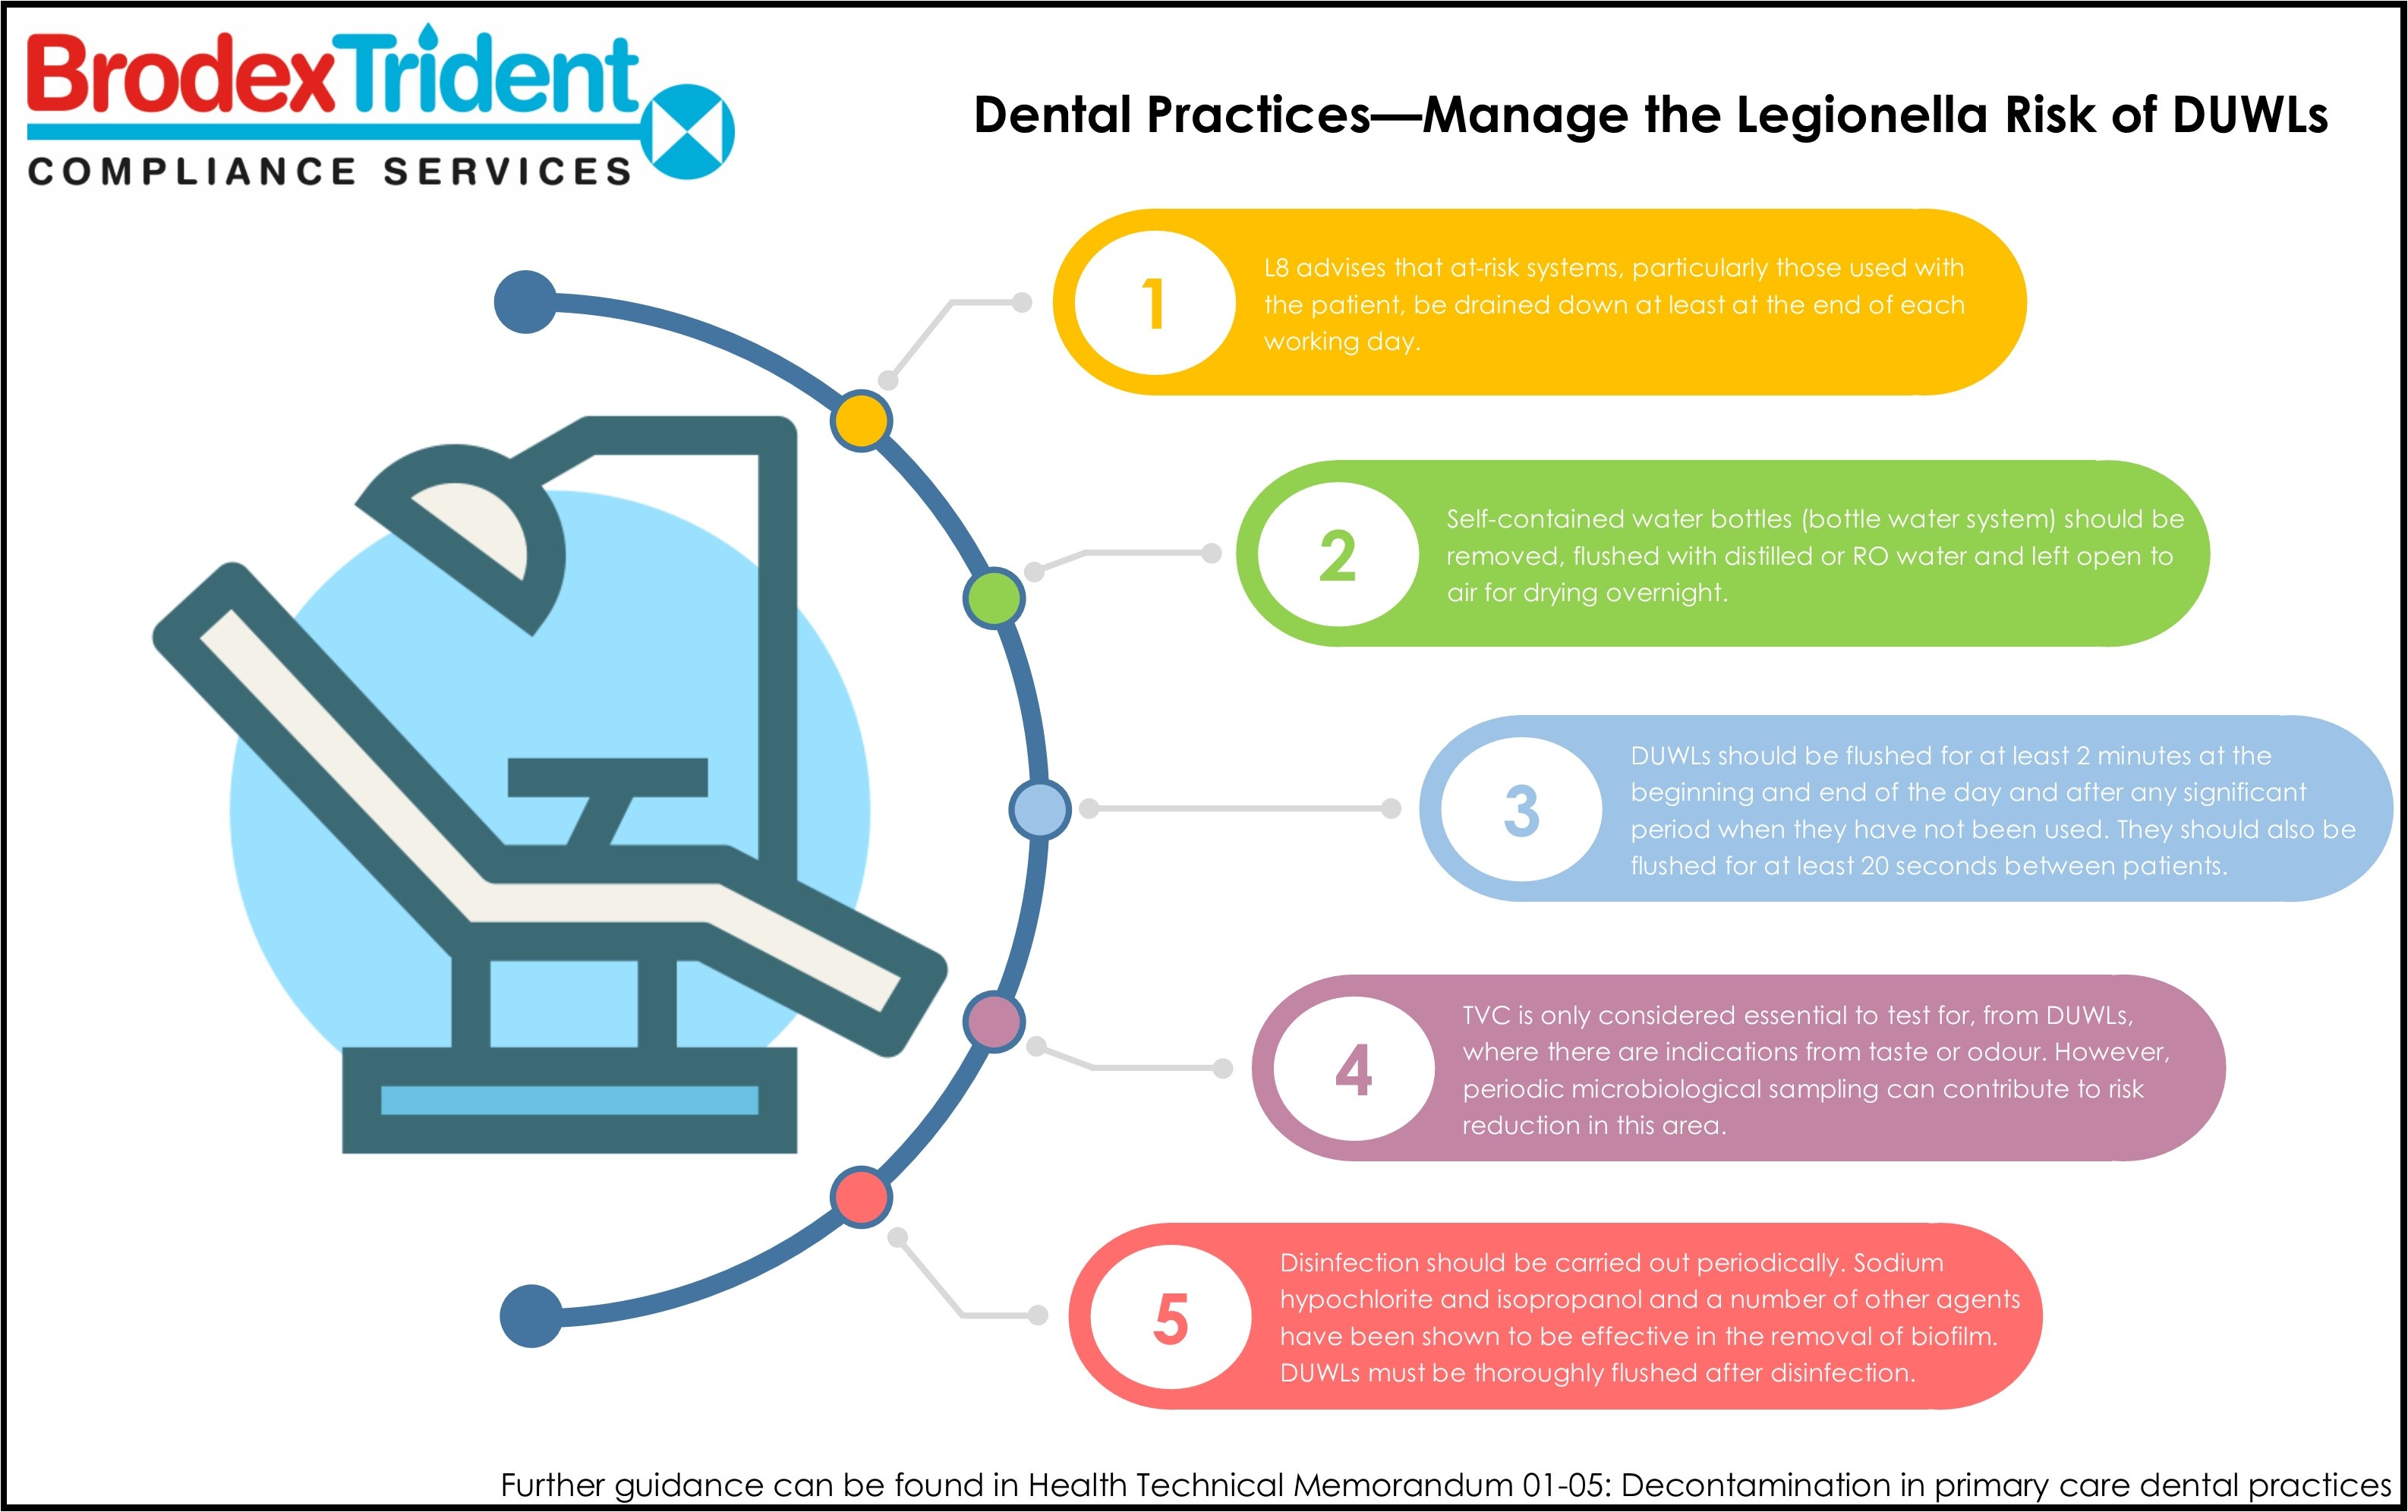 BT - Dental Practices - Manage the Legionella Risk of DUWLs.jpg